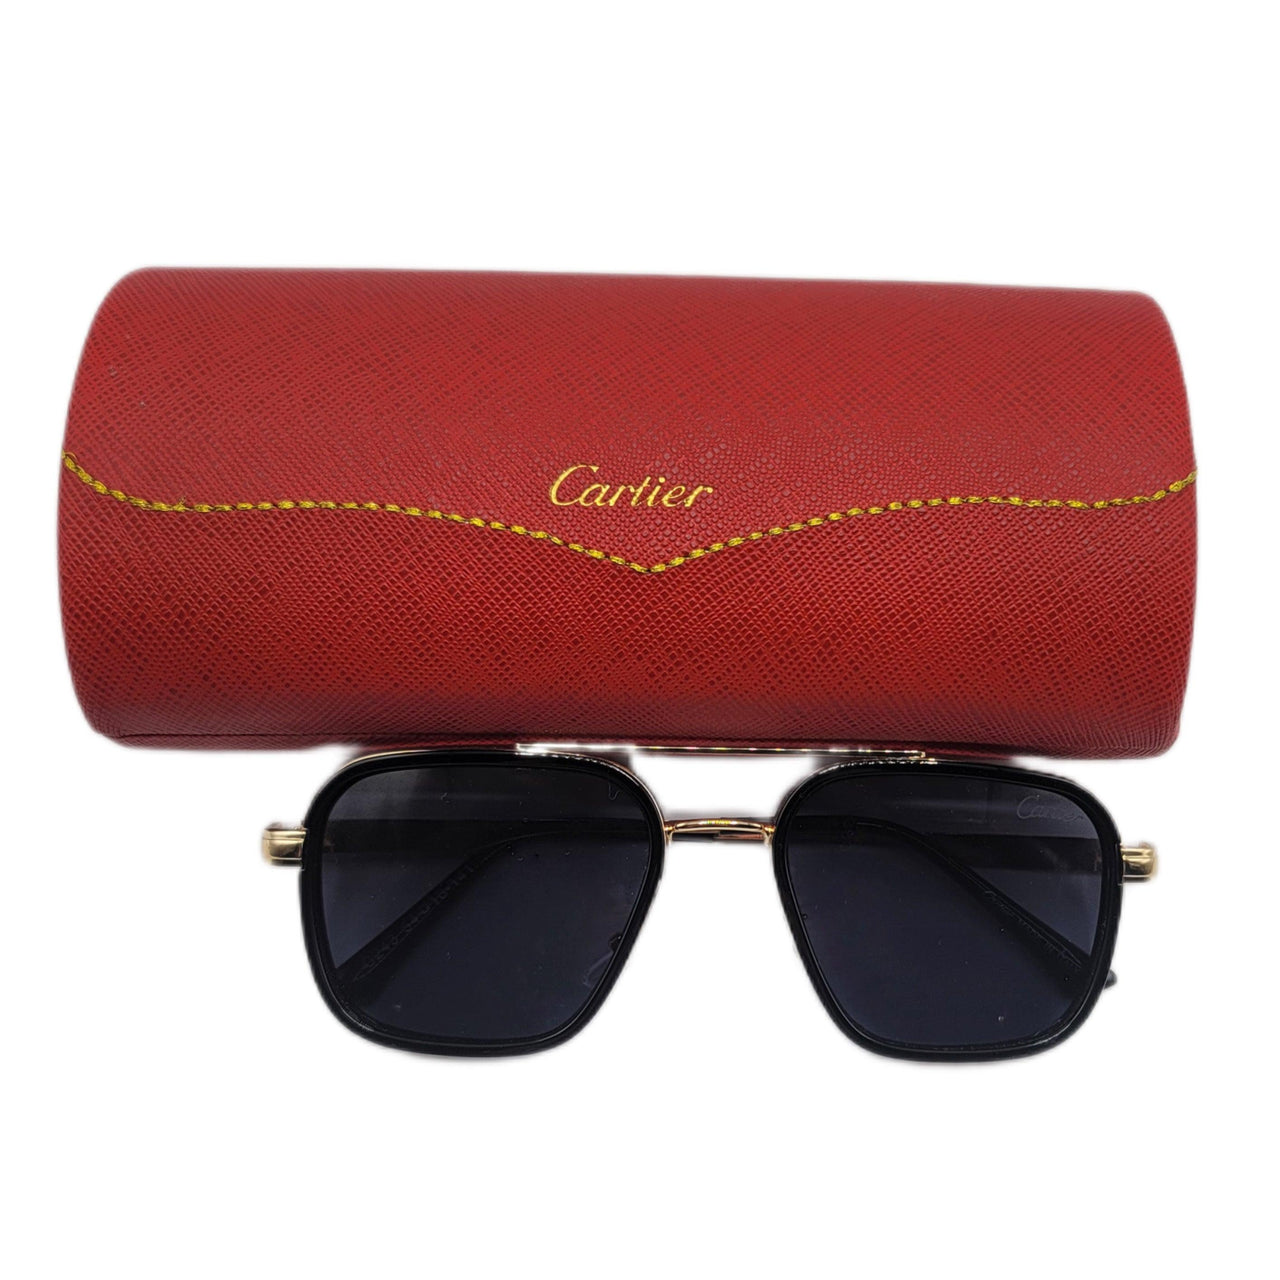 The Bag Couture Sunglasses Cartier Sunglasses 2